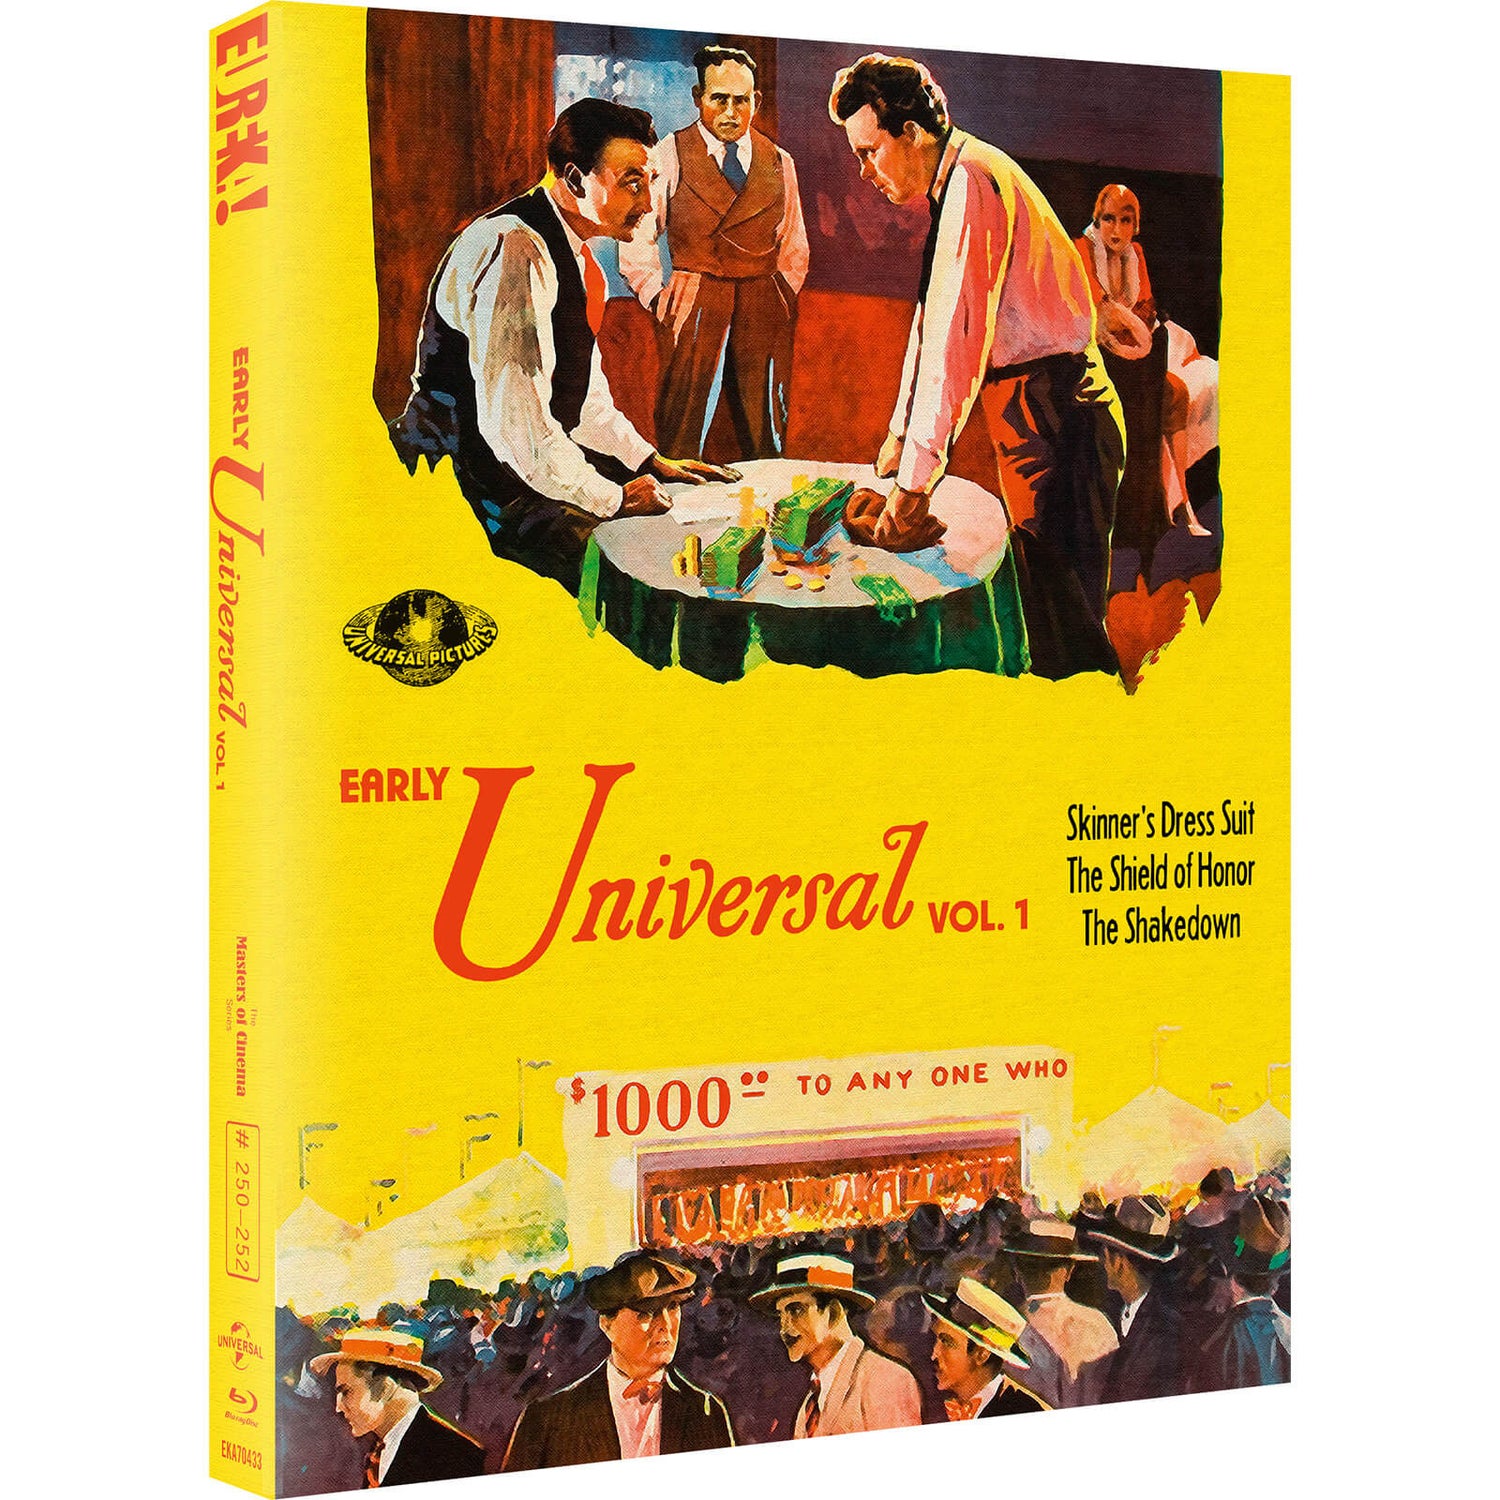 Early Universal Volume 1 (Masters of Cinema)